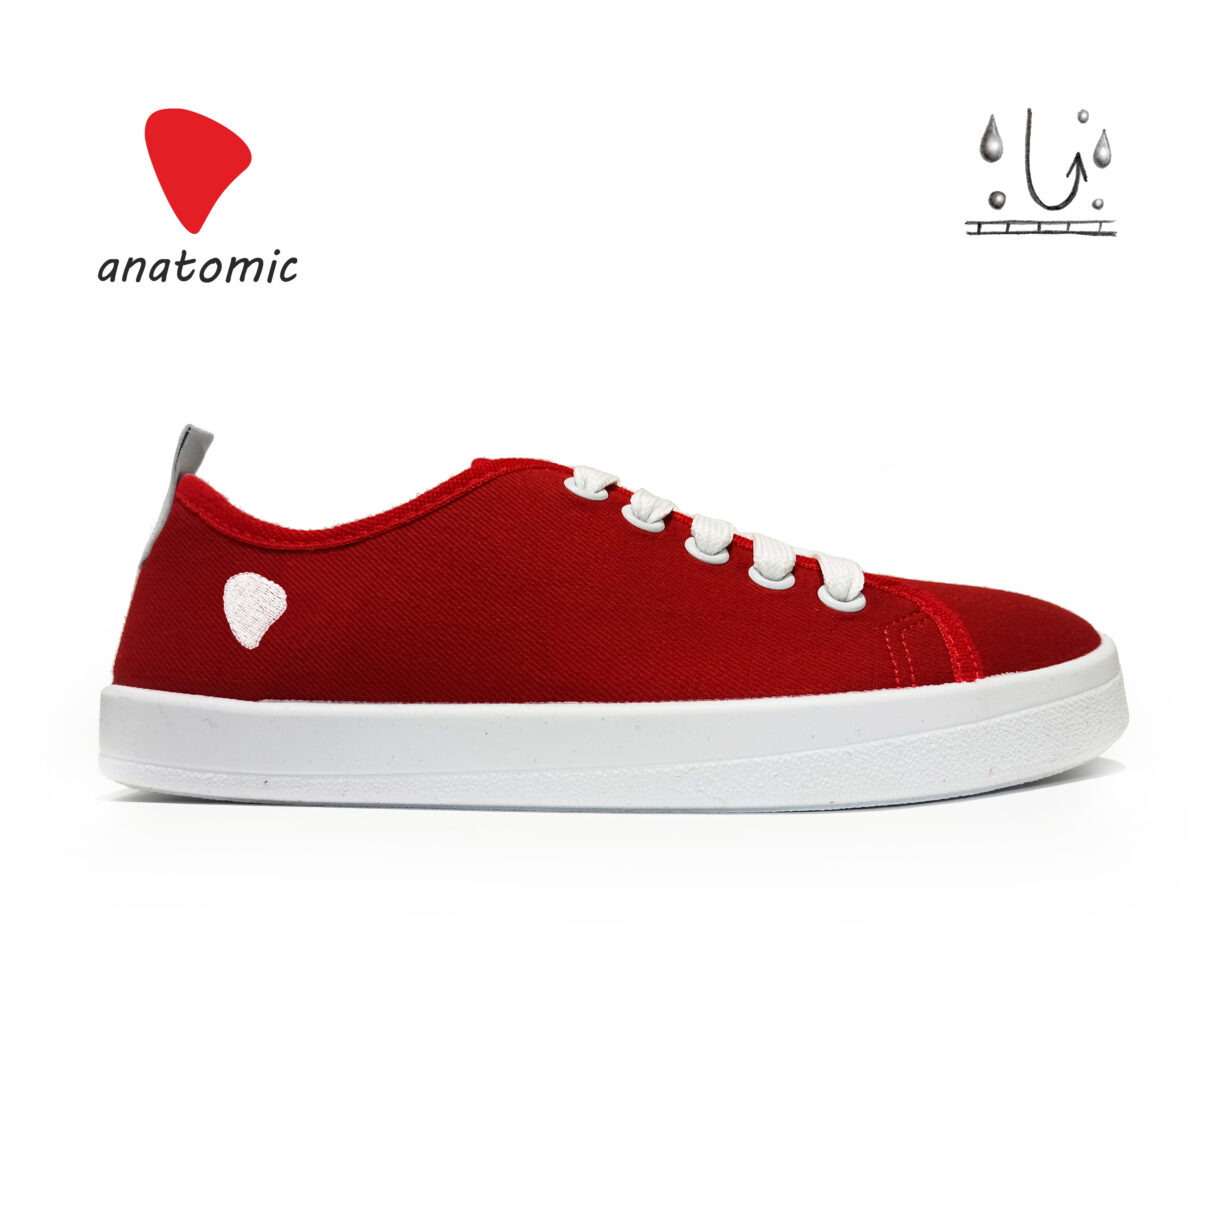 Anatomic barfotasneakers - Röd vattenavstötande